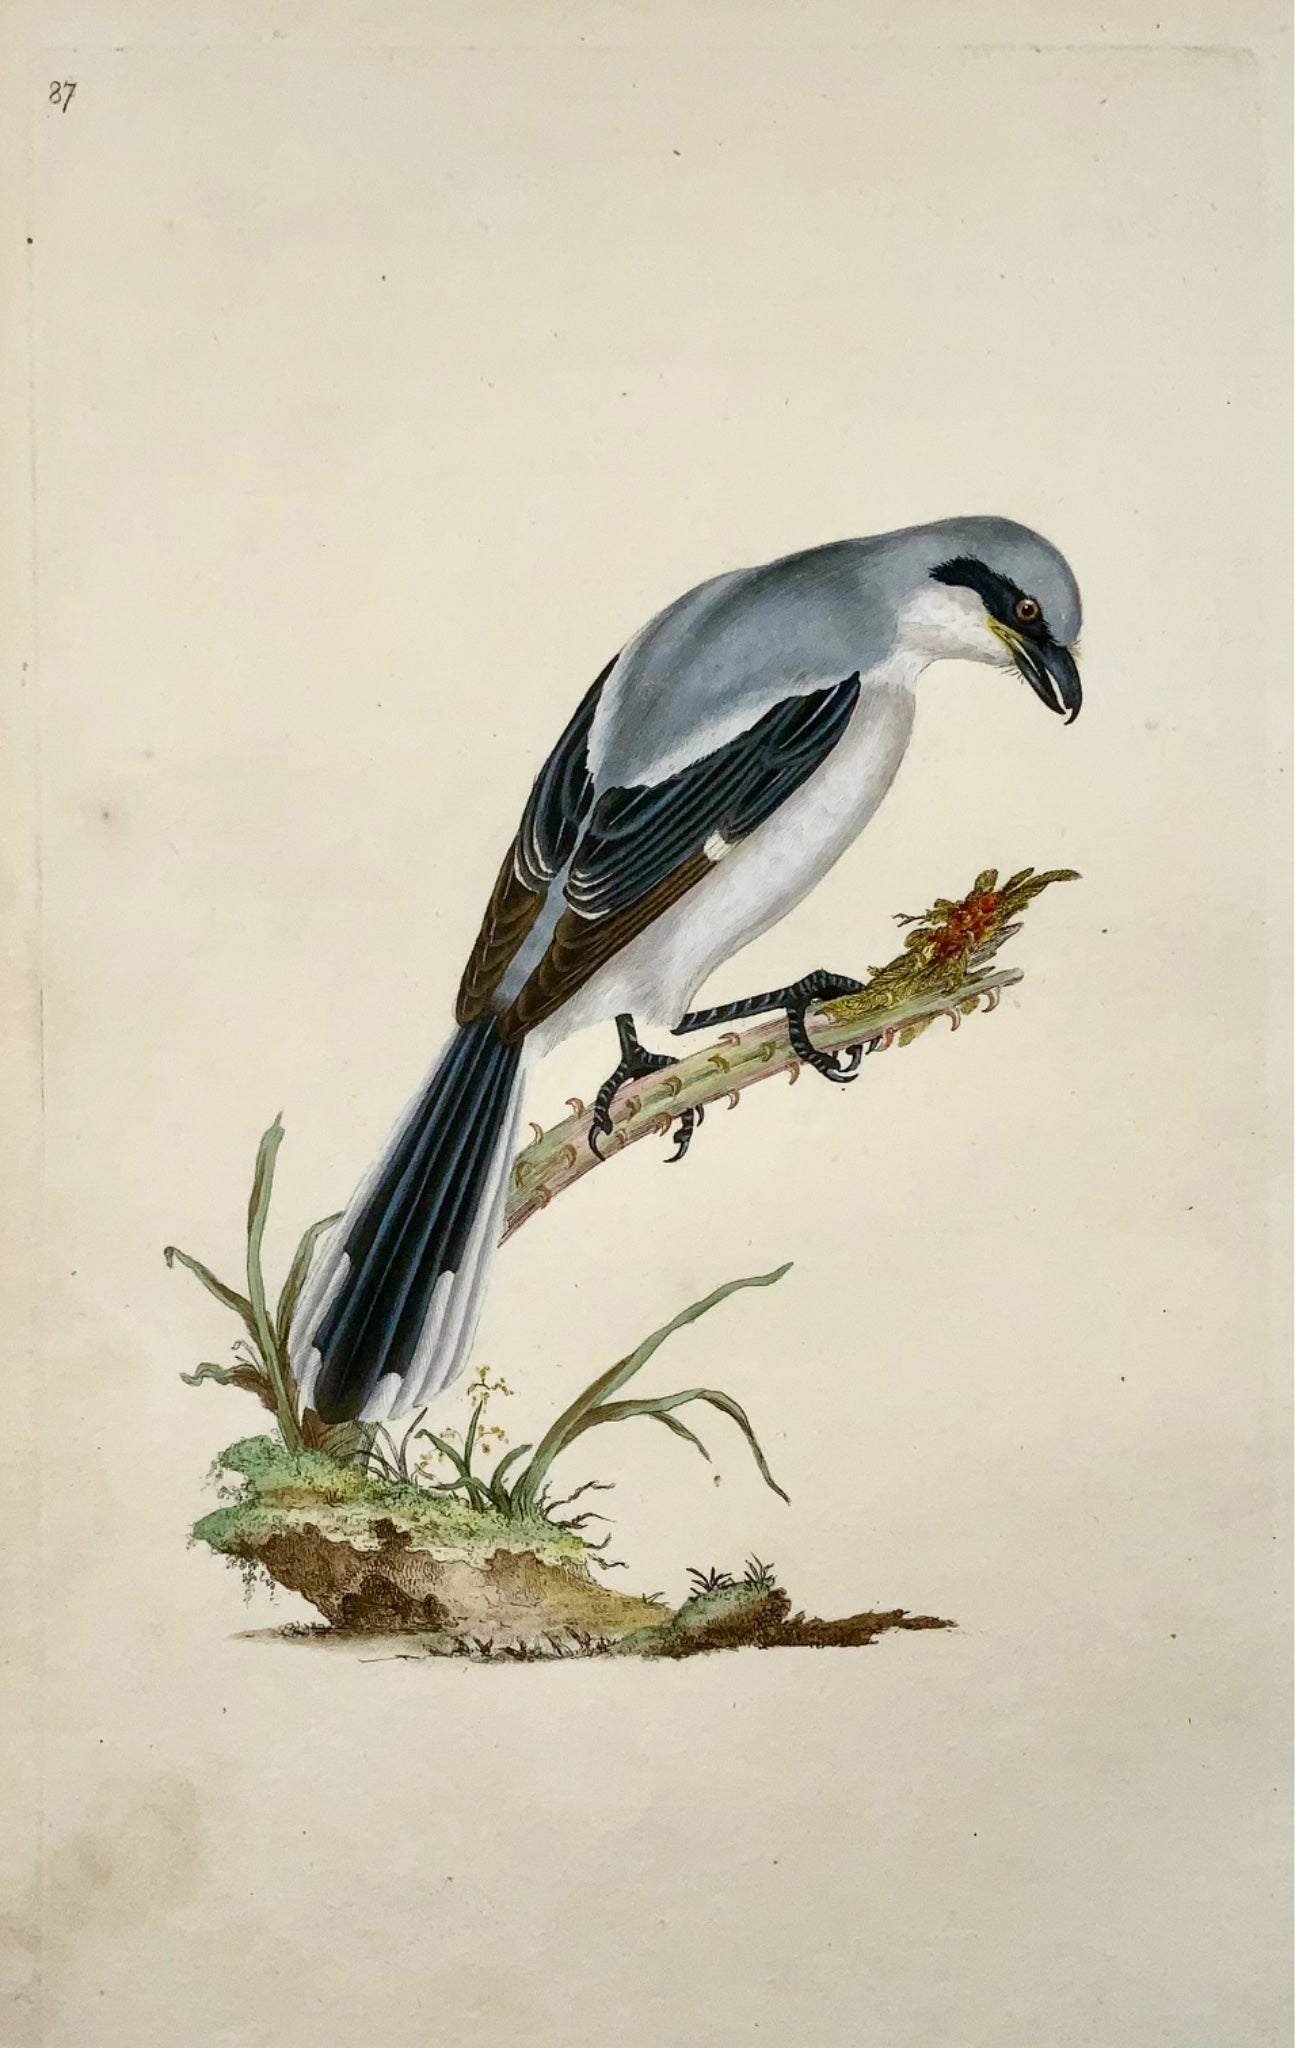 1794 Edward Donovan, Great Shrike, ornithology, fine hand coloured engraving